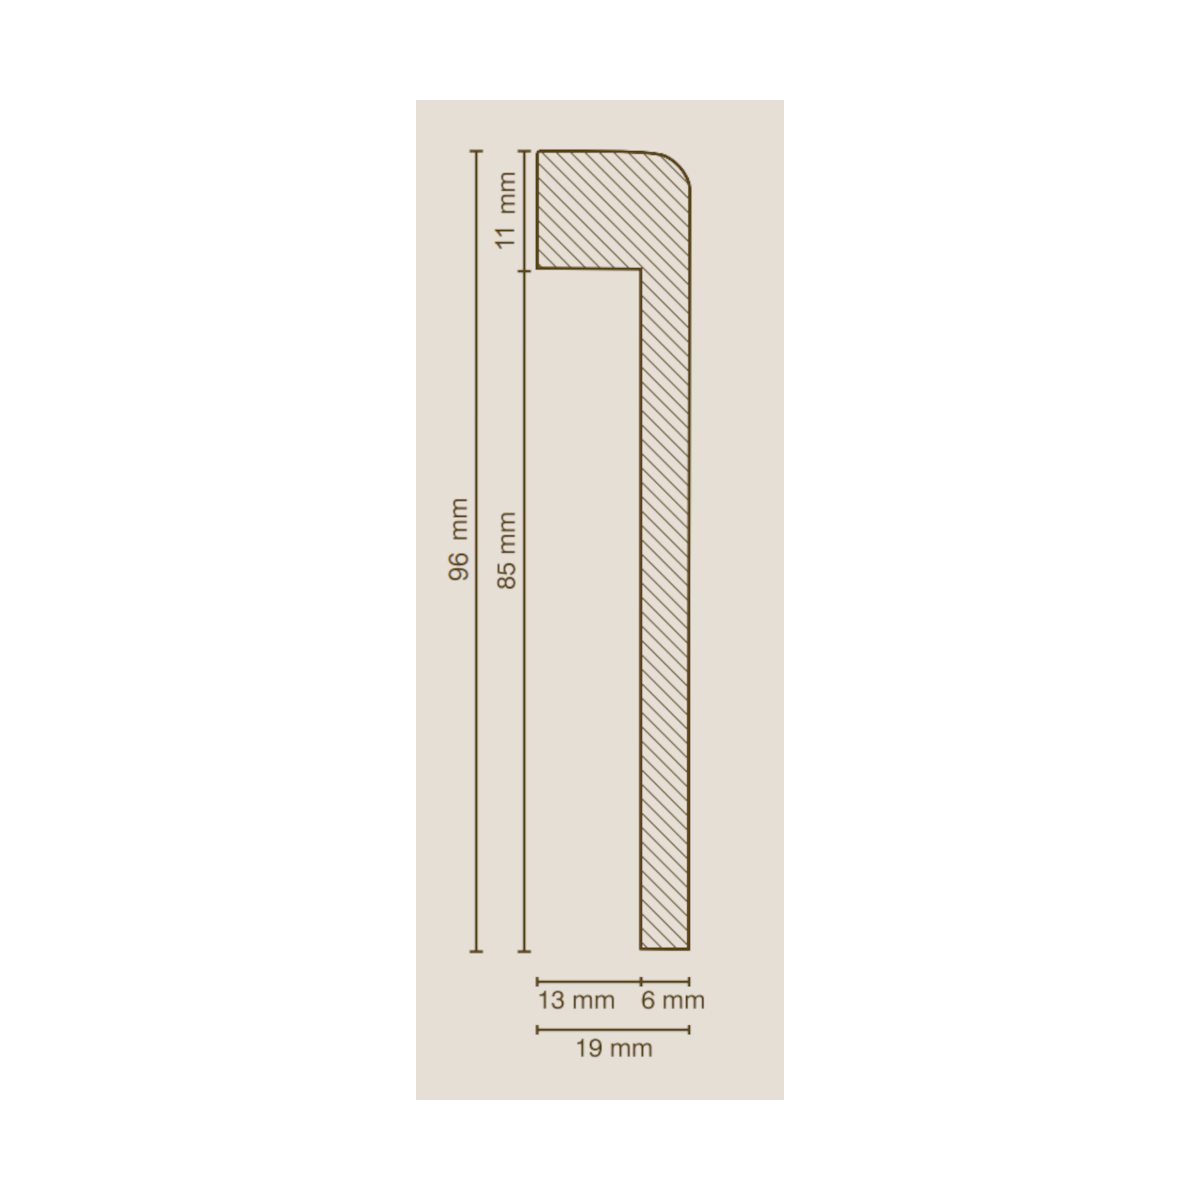 SÜDBROCK Abdeckleiste MDF für Fliesensockel 19 x 96 mm, weiß lackierfähig foliert, 250 cm